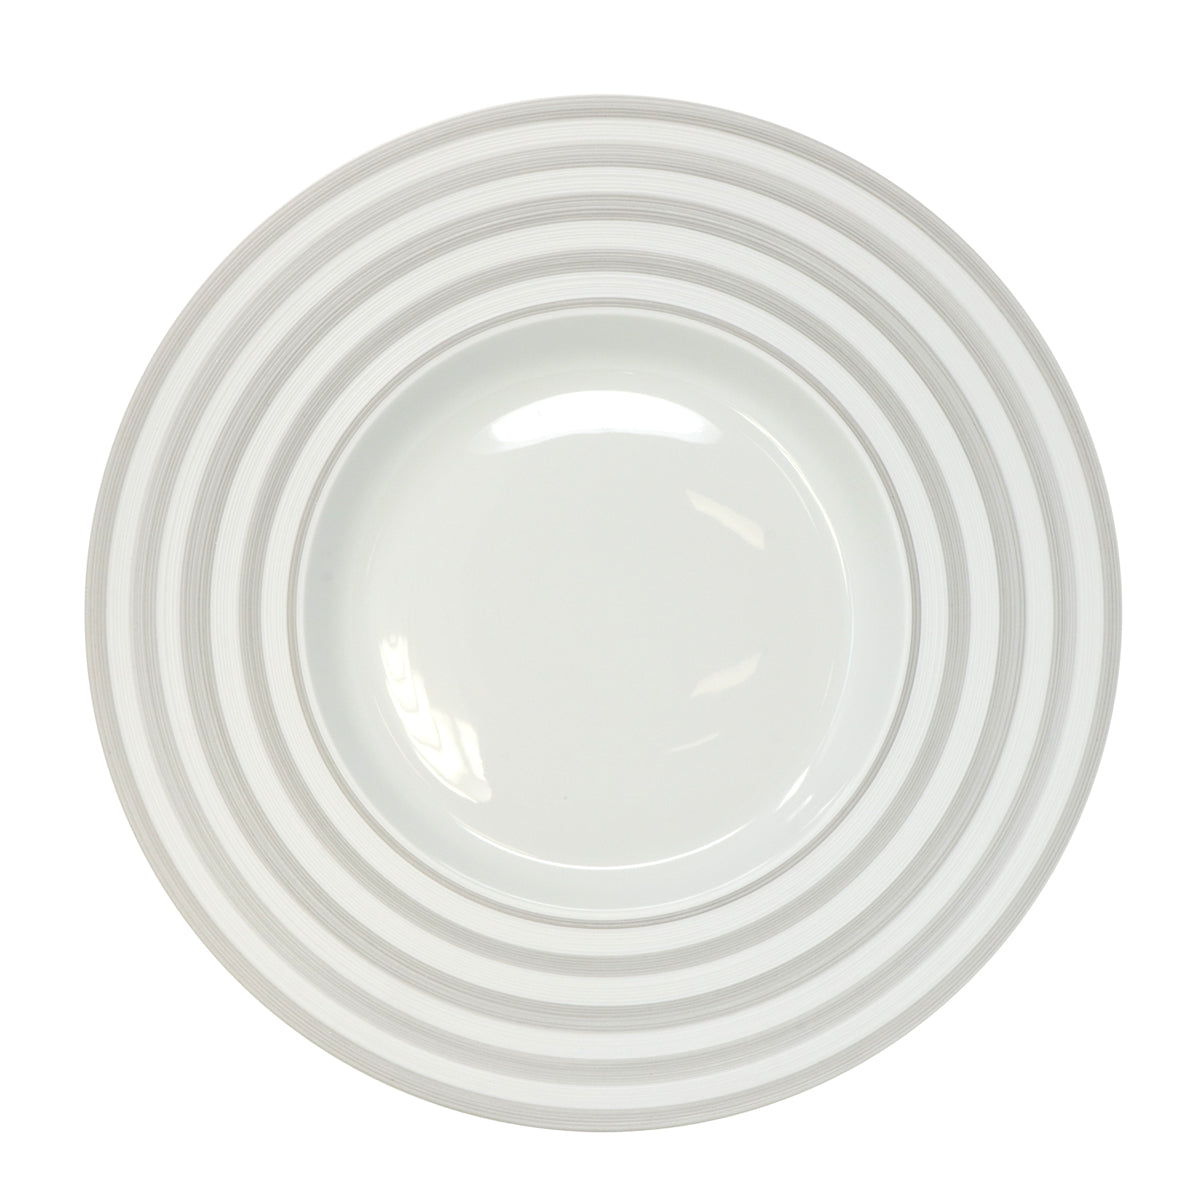 HEMISPHERE Grey Striped - Rim soup plate, large